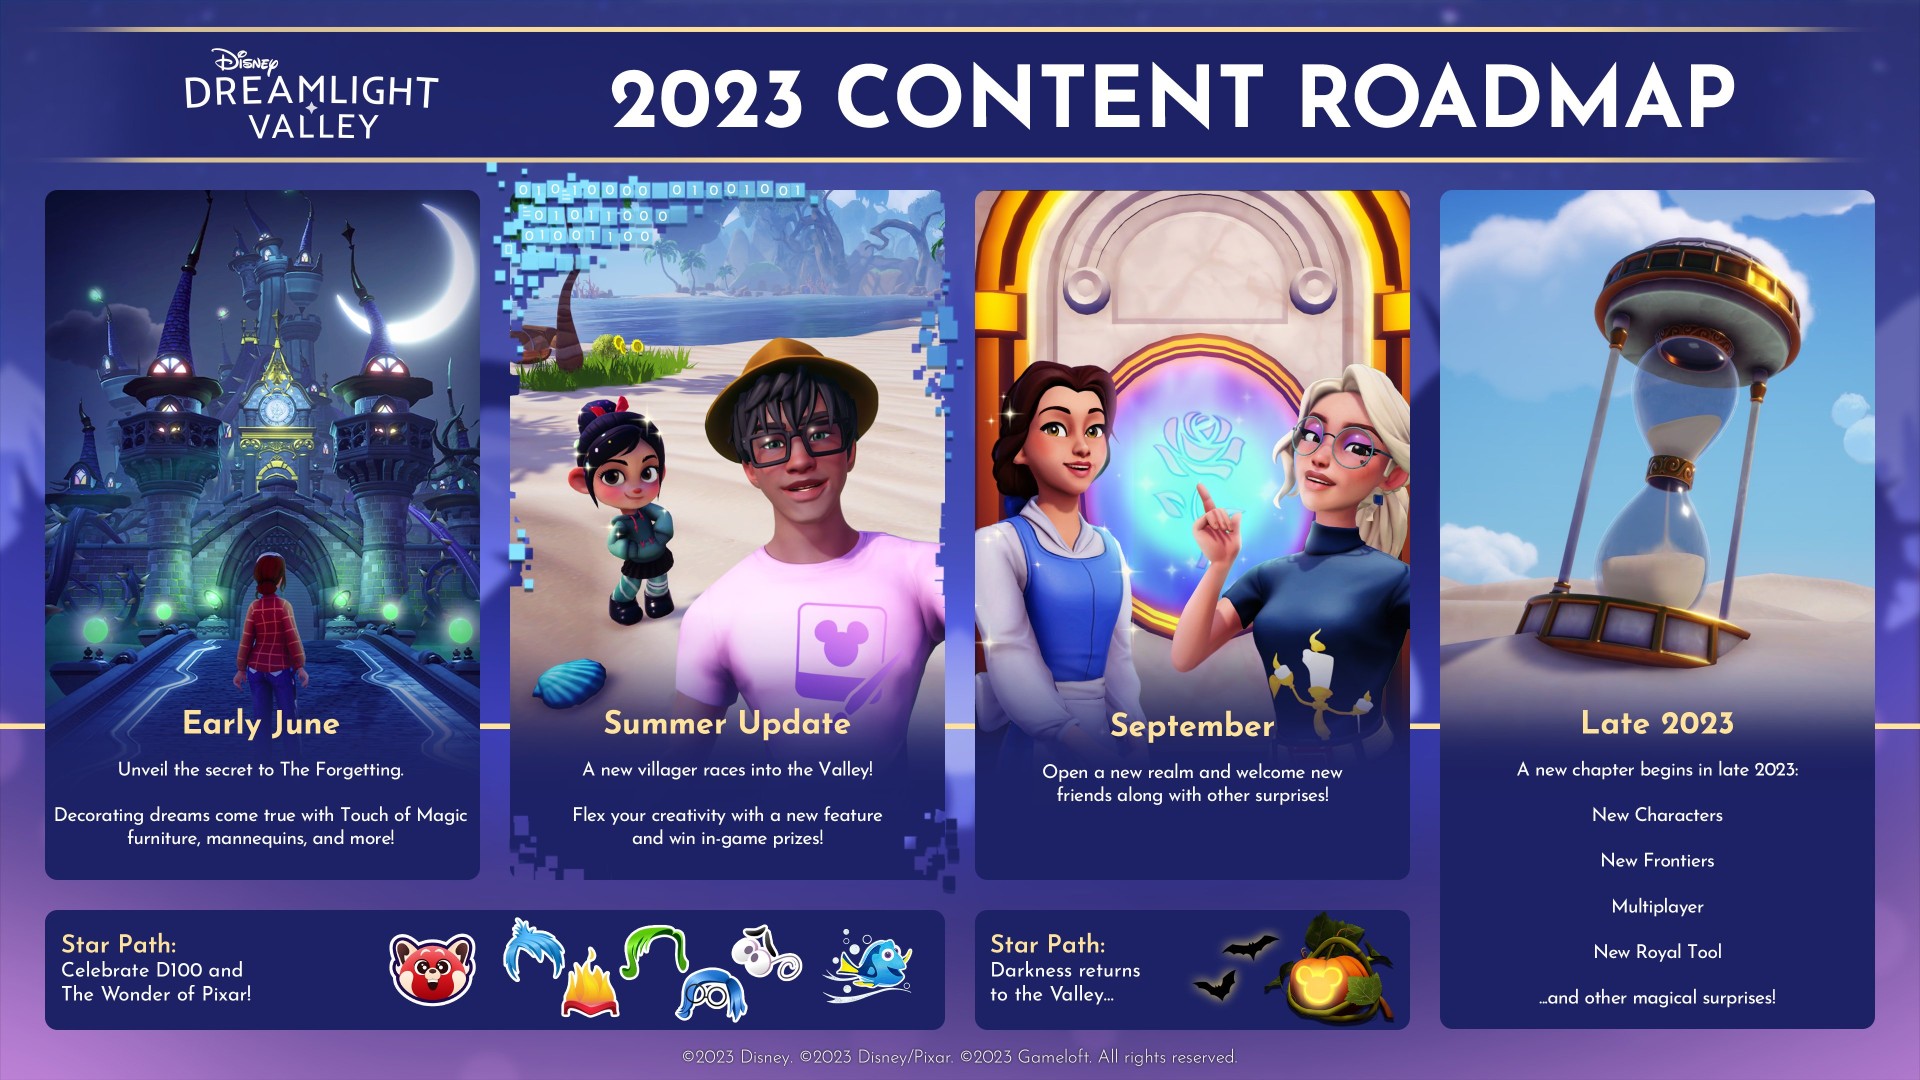 Next Dreamlight Valley Update - รูปภาพแสดงแผนงาน 2023 รวมถึง Princess Vanellope, Belle และอีกมากมาย